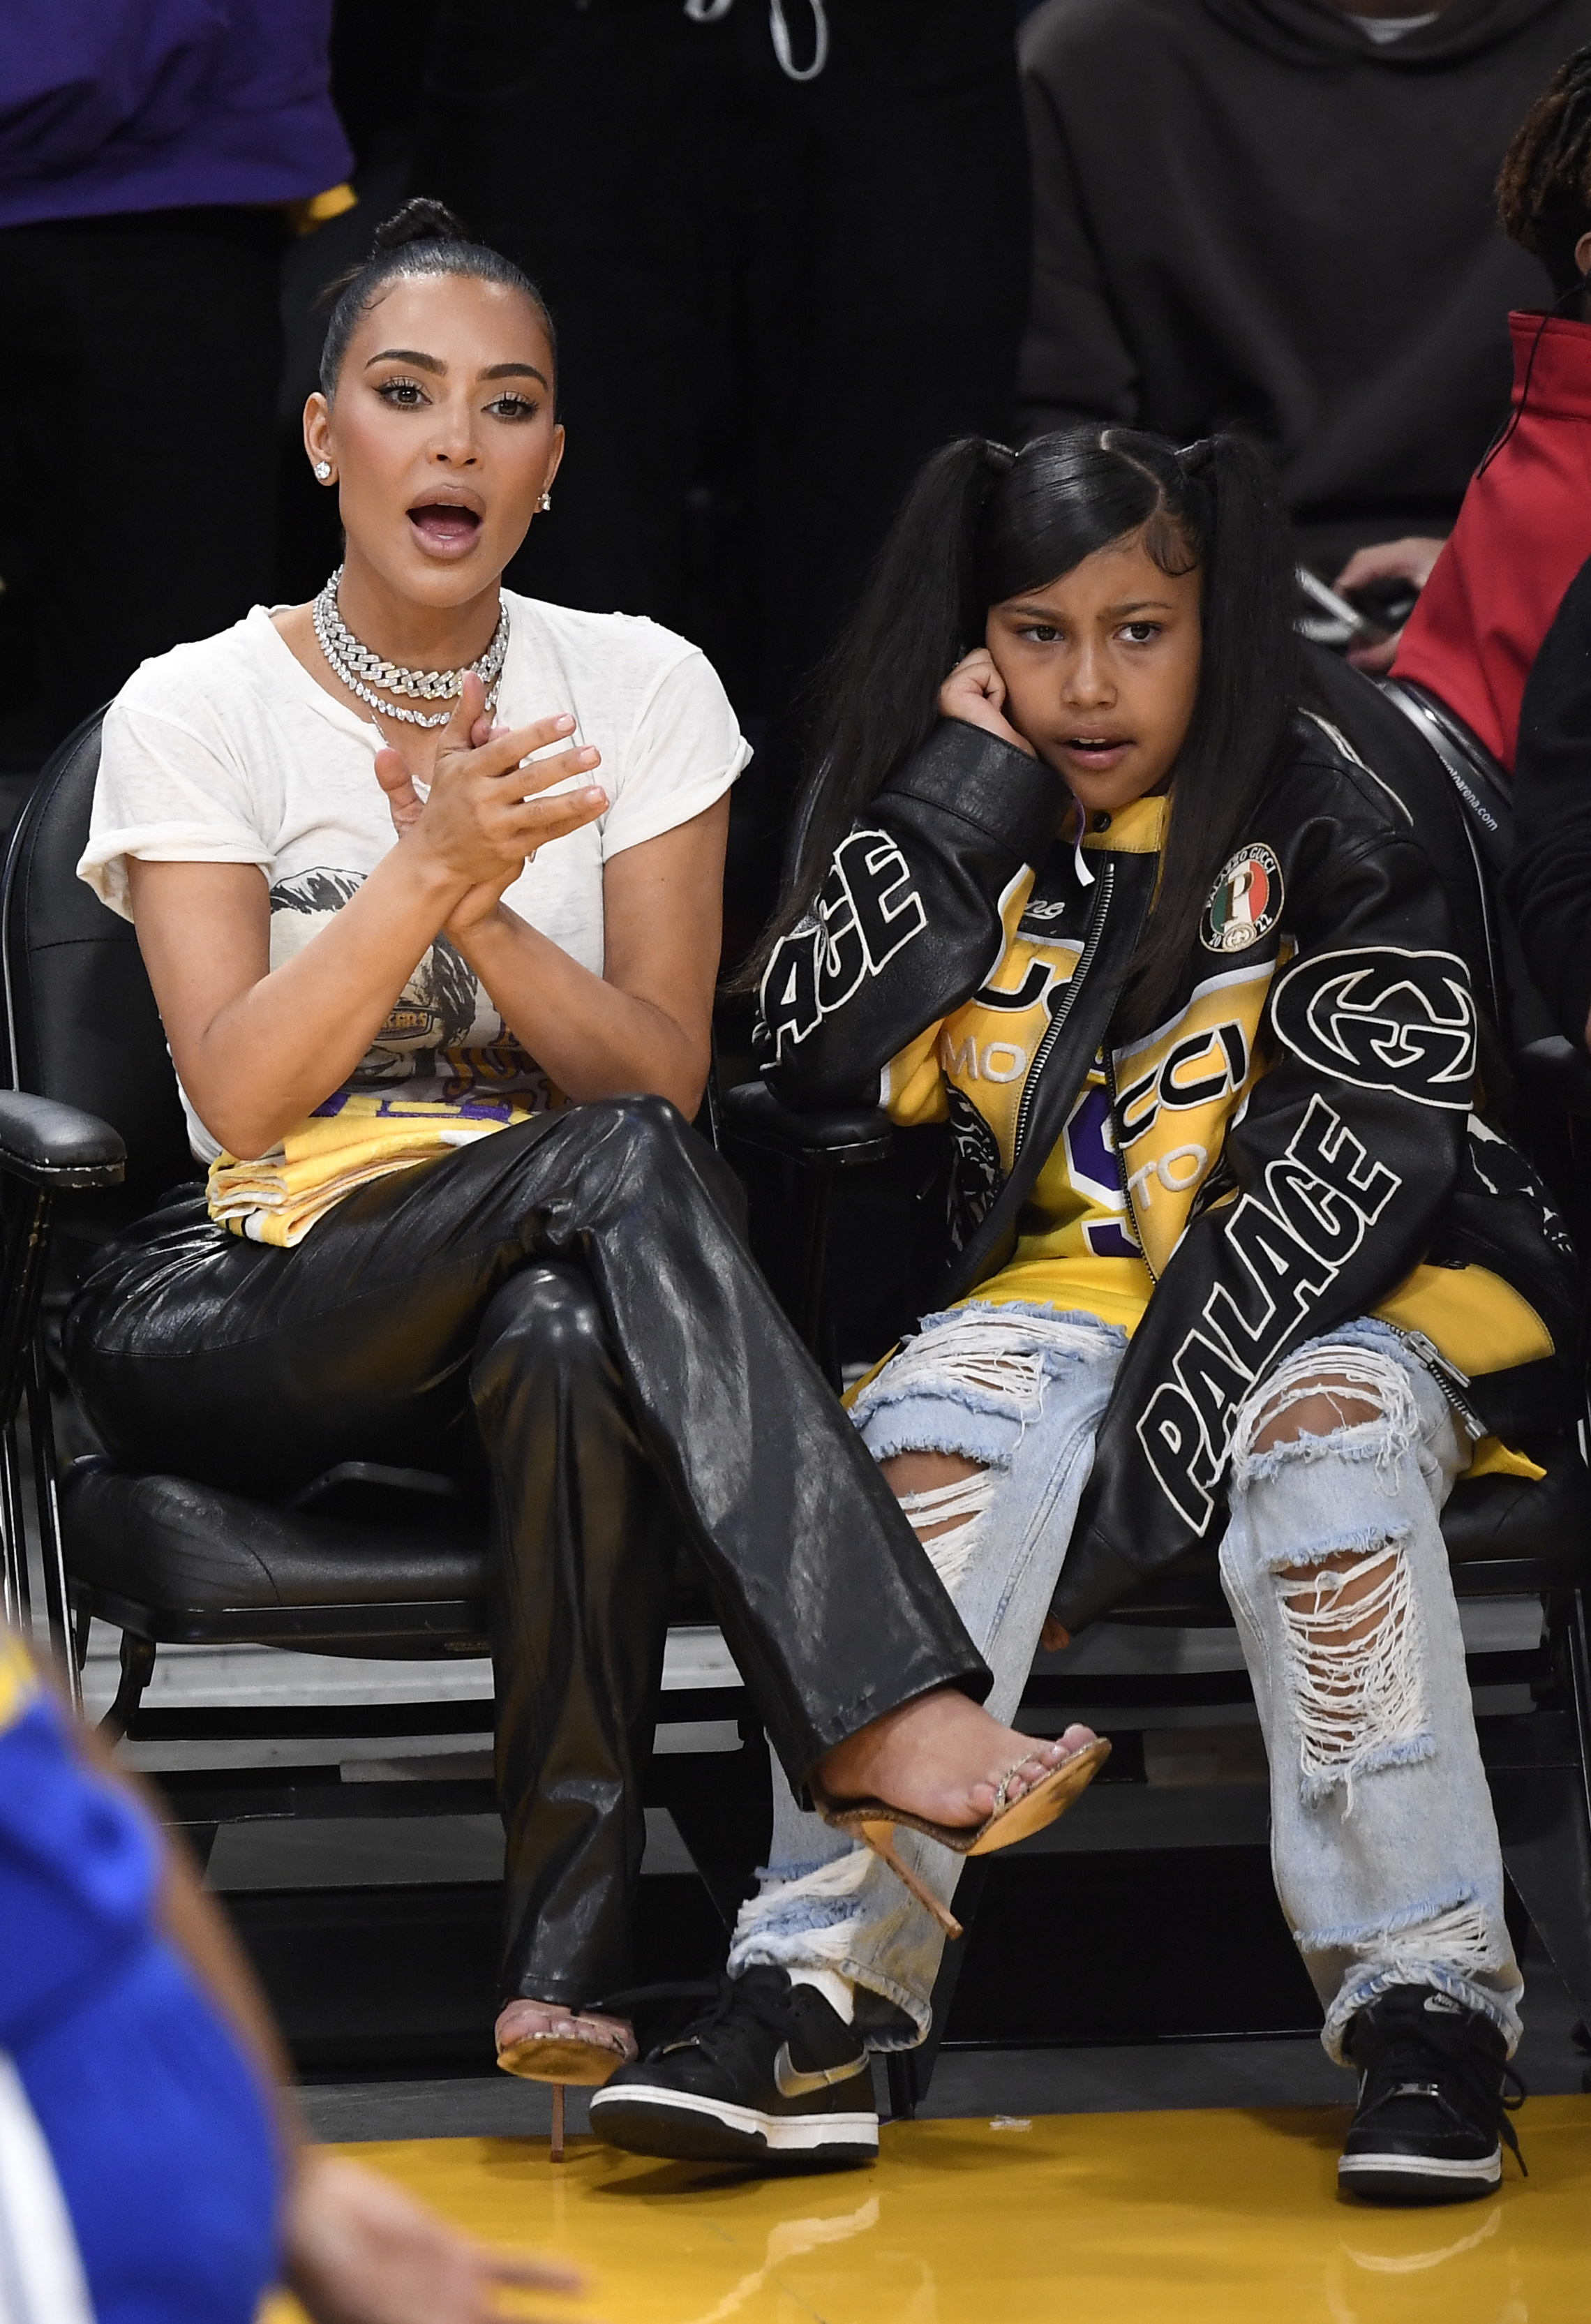 Kim Kardashian and North West at a basketball game